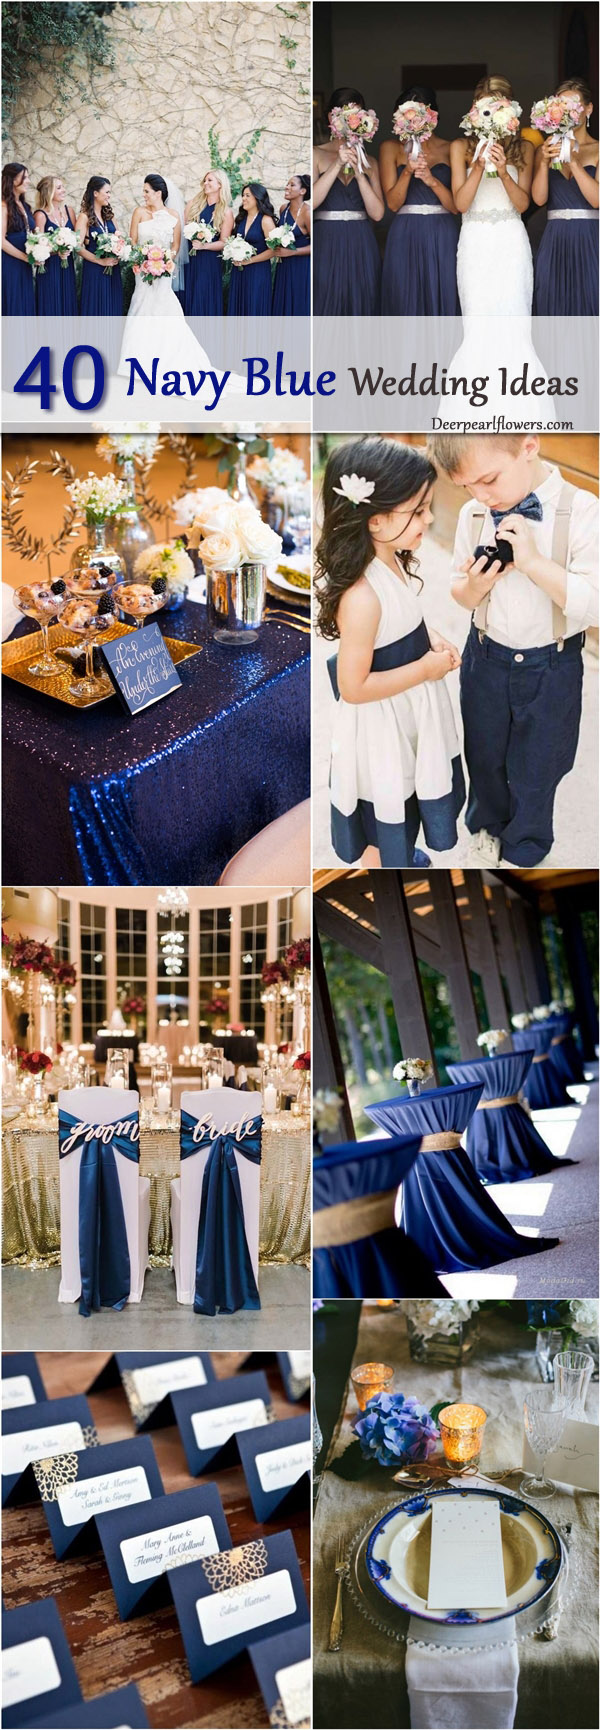 Navy blue wedding color ideas